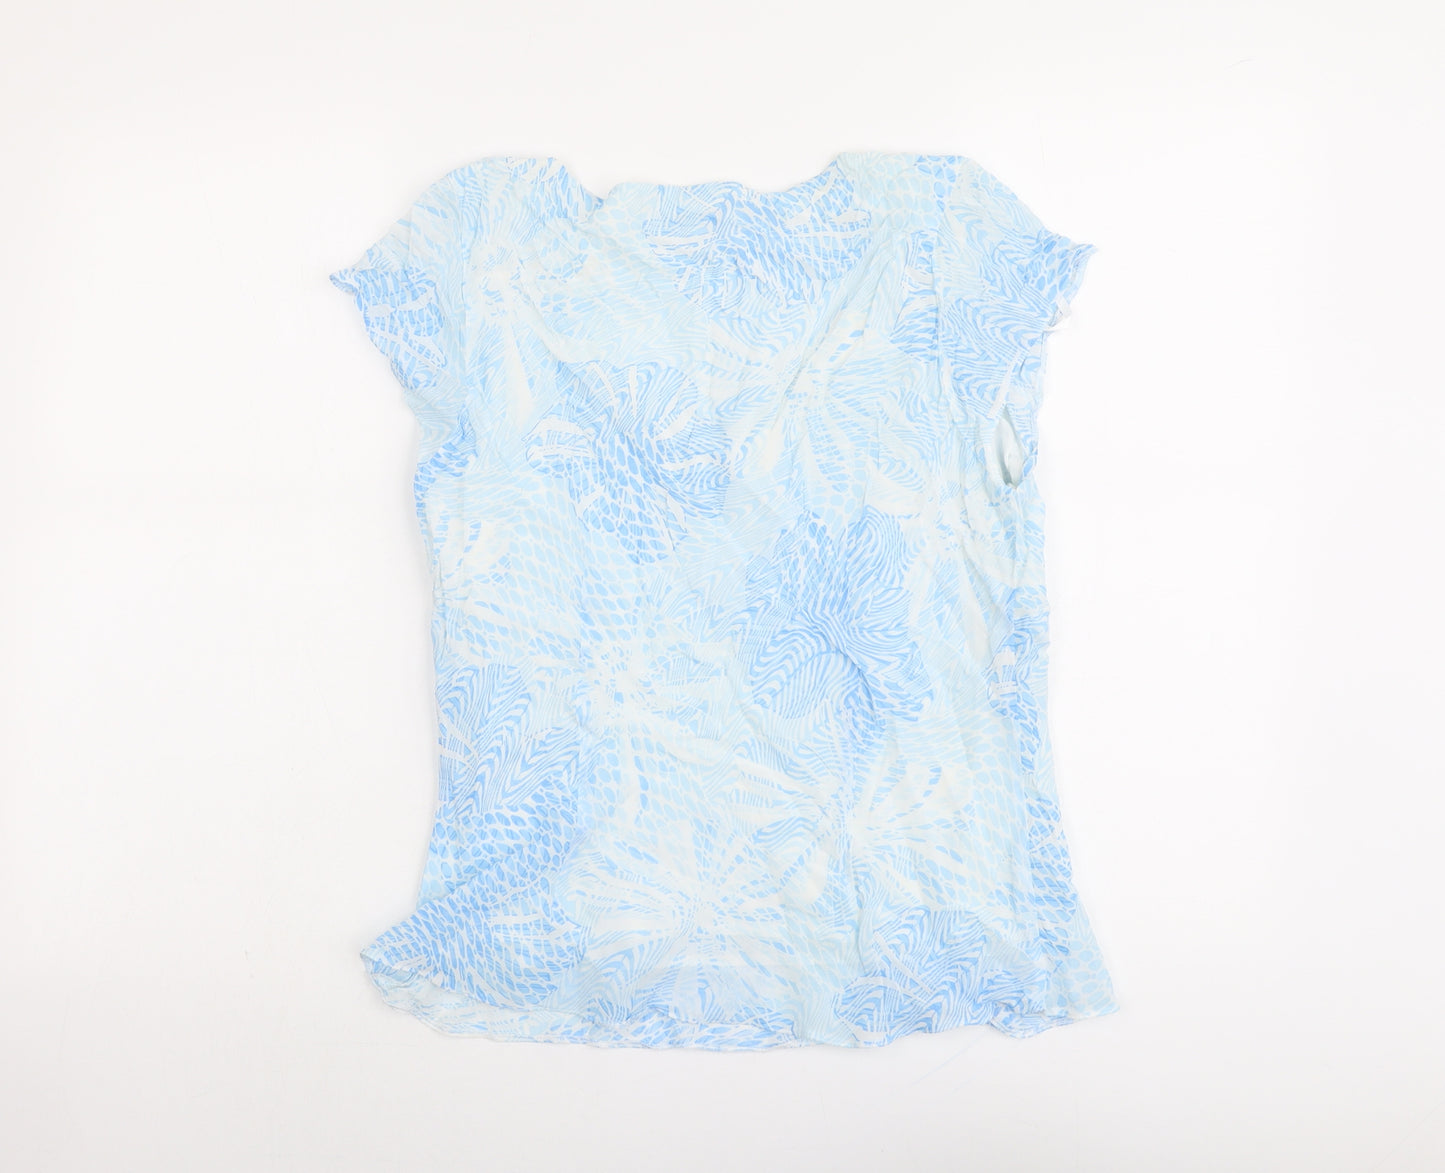 M&Co Womens Blue Geometric Viscose Basic T-Shirt Size 14 V-Neck